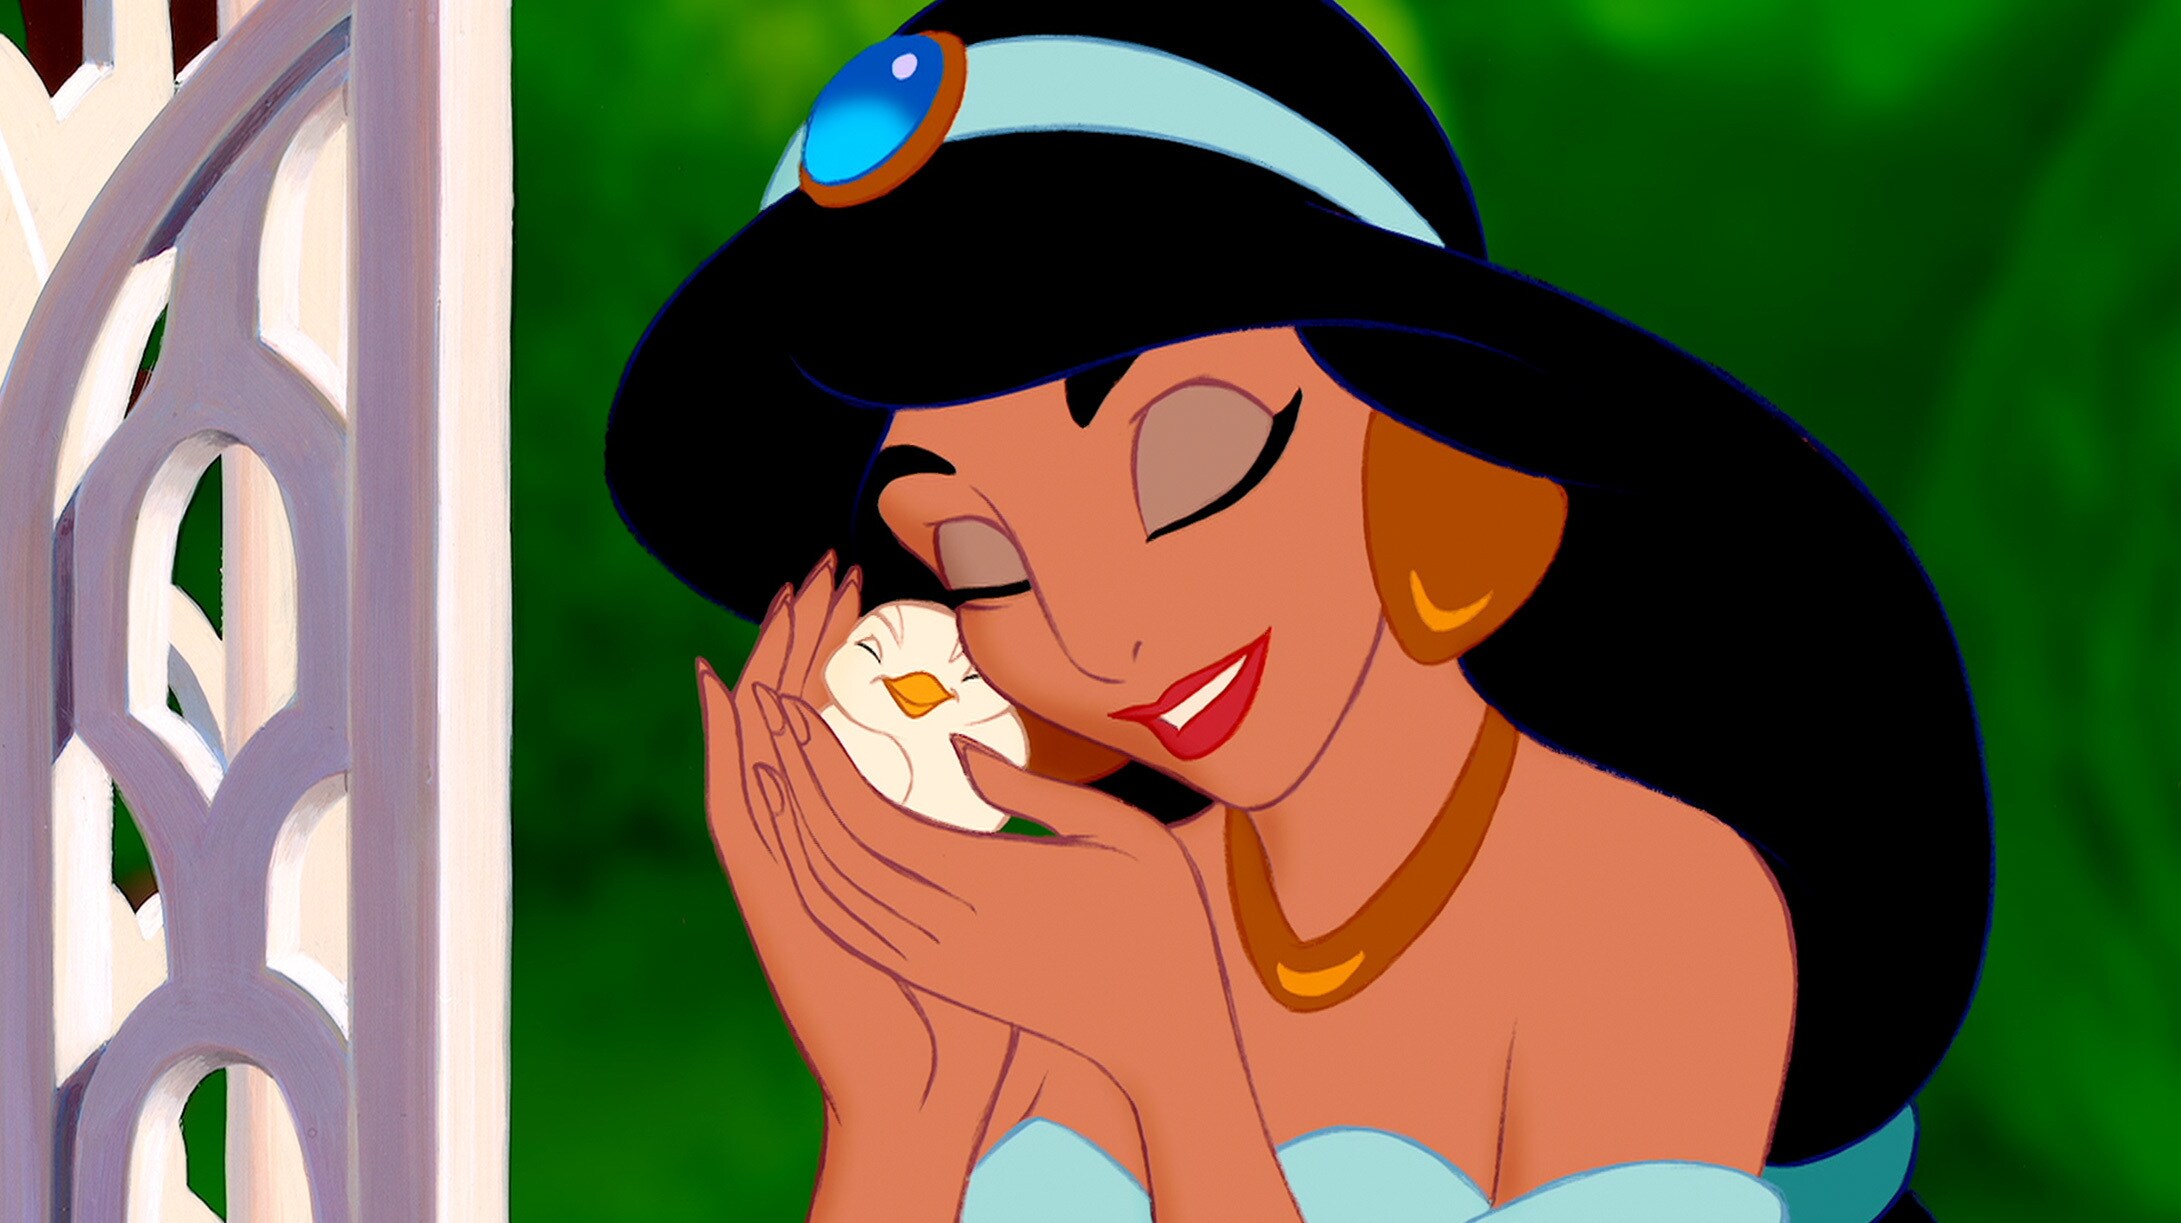 Disney Princess Jasmine petting a small bird. 